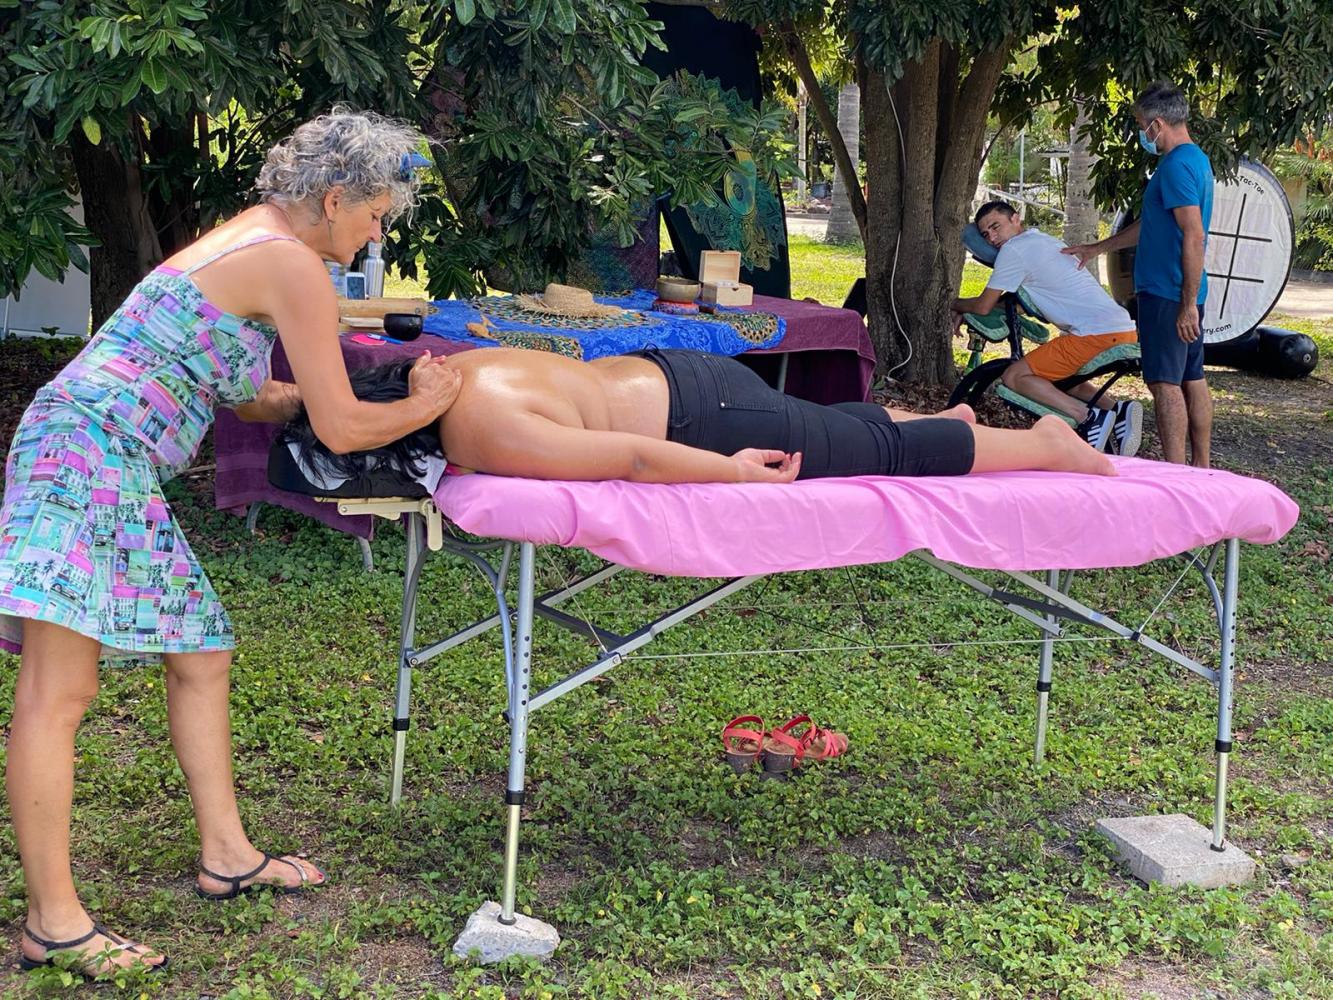 Shiatsu - Ayurvedic - Hawaiian masseuses at your event